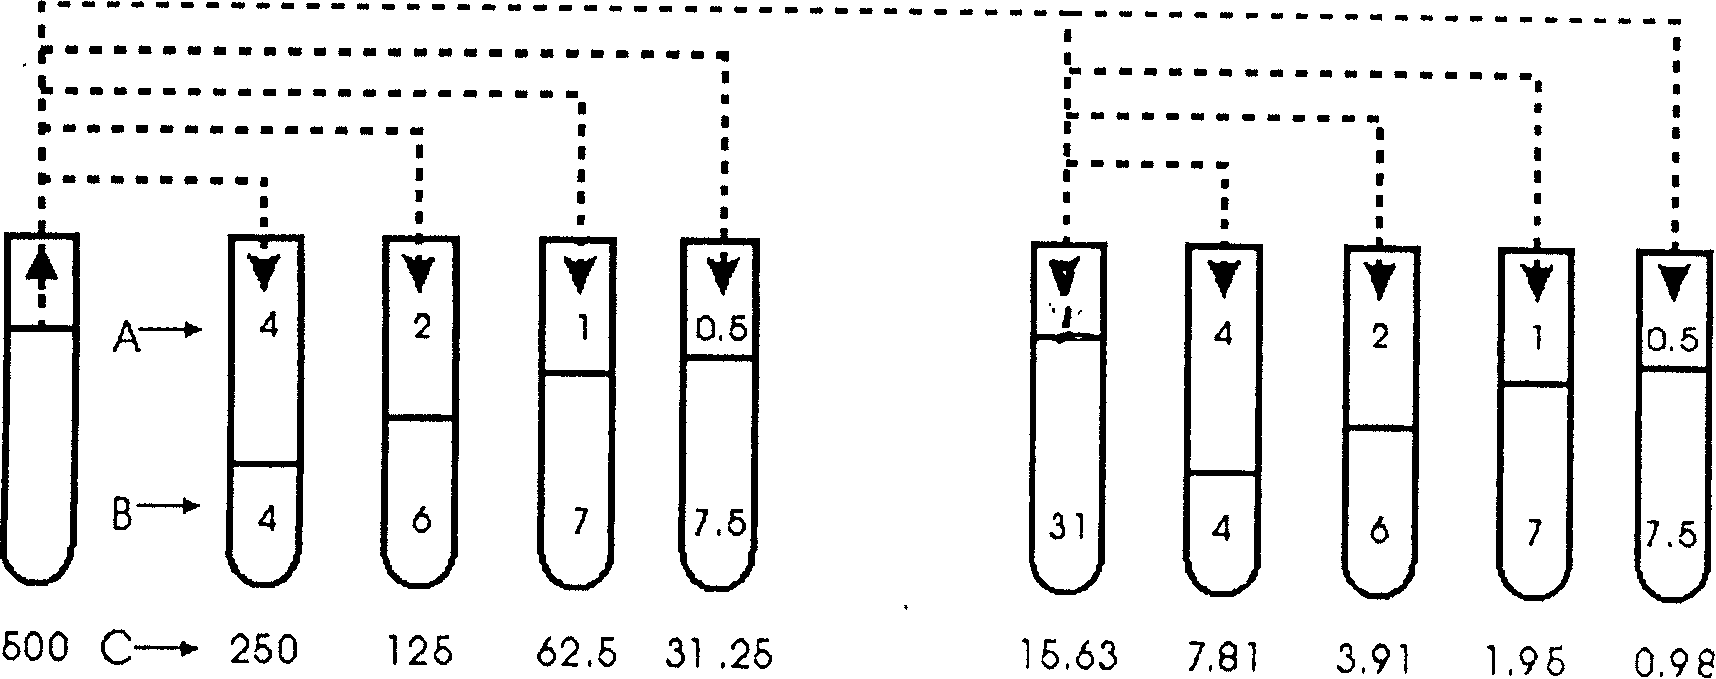 Quaternary bis-ammonium salt diamine fluoride and preparation method thereof